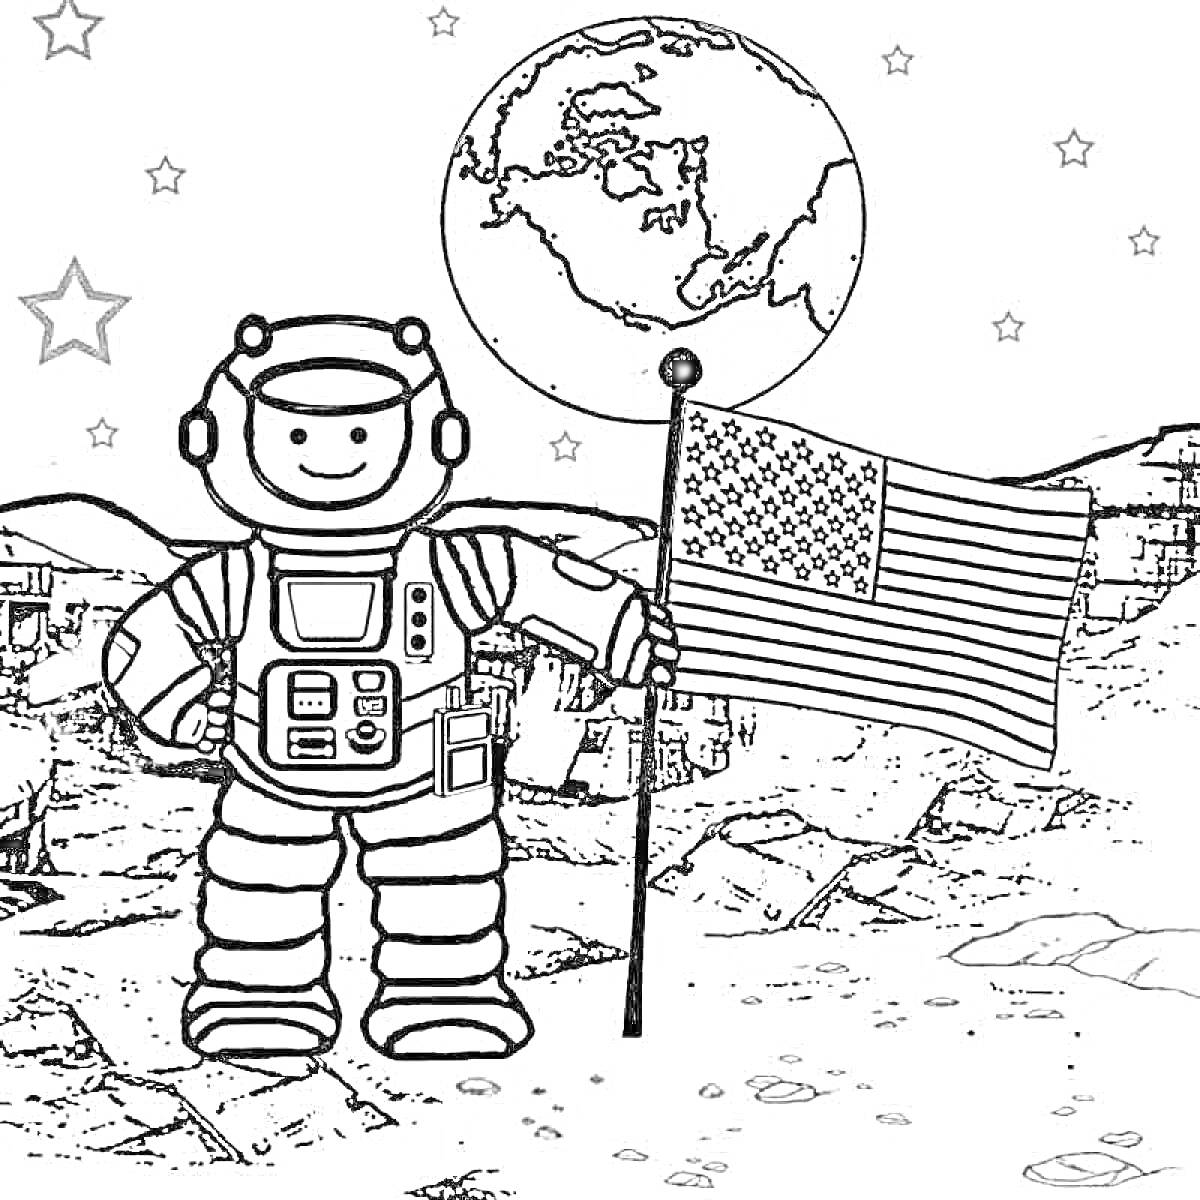 Космонавт с американским флагом на Луне, звезды, Земля на фоне